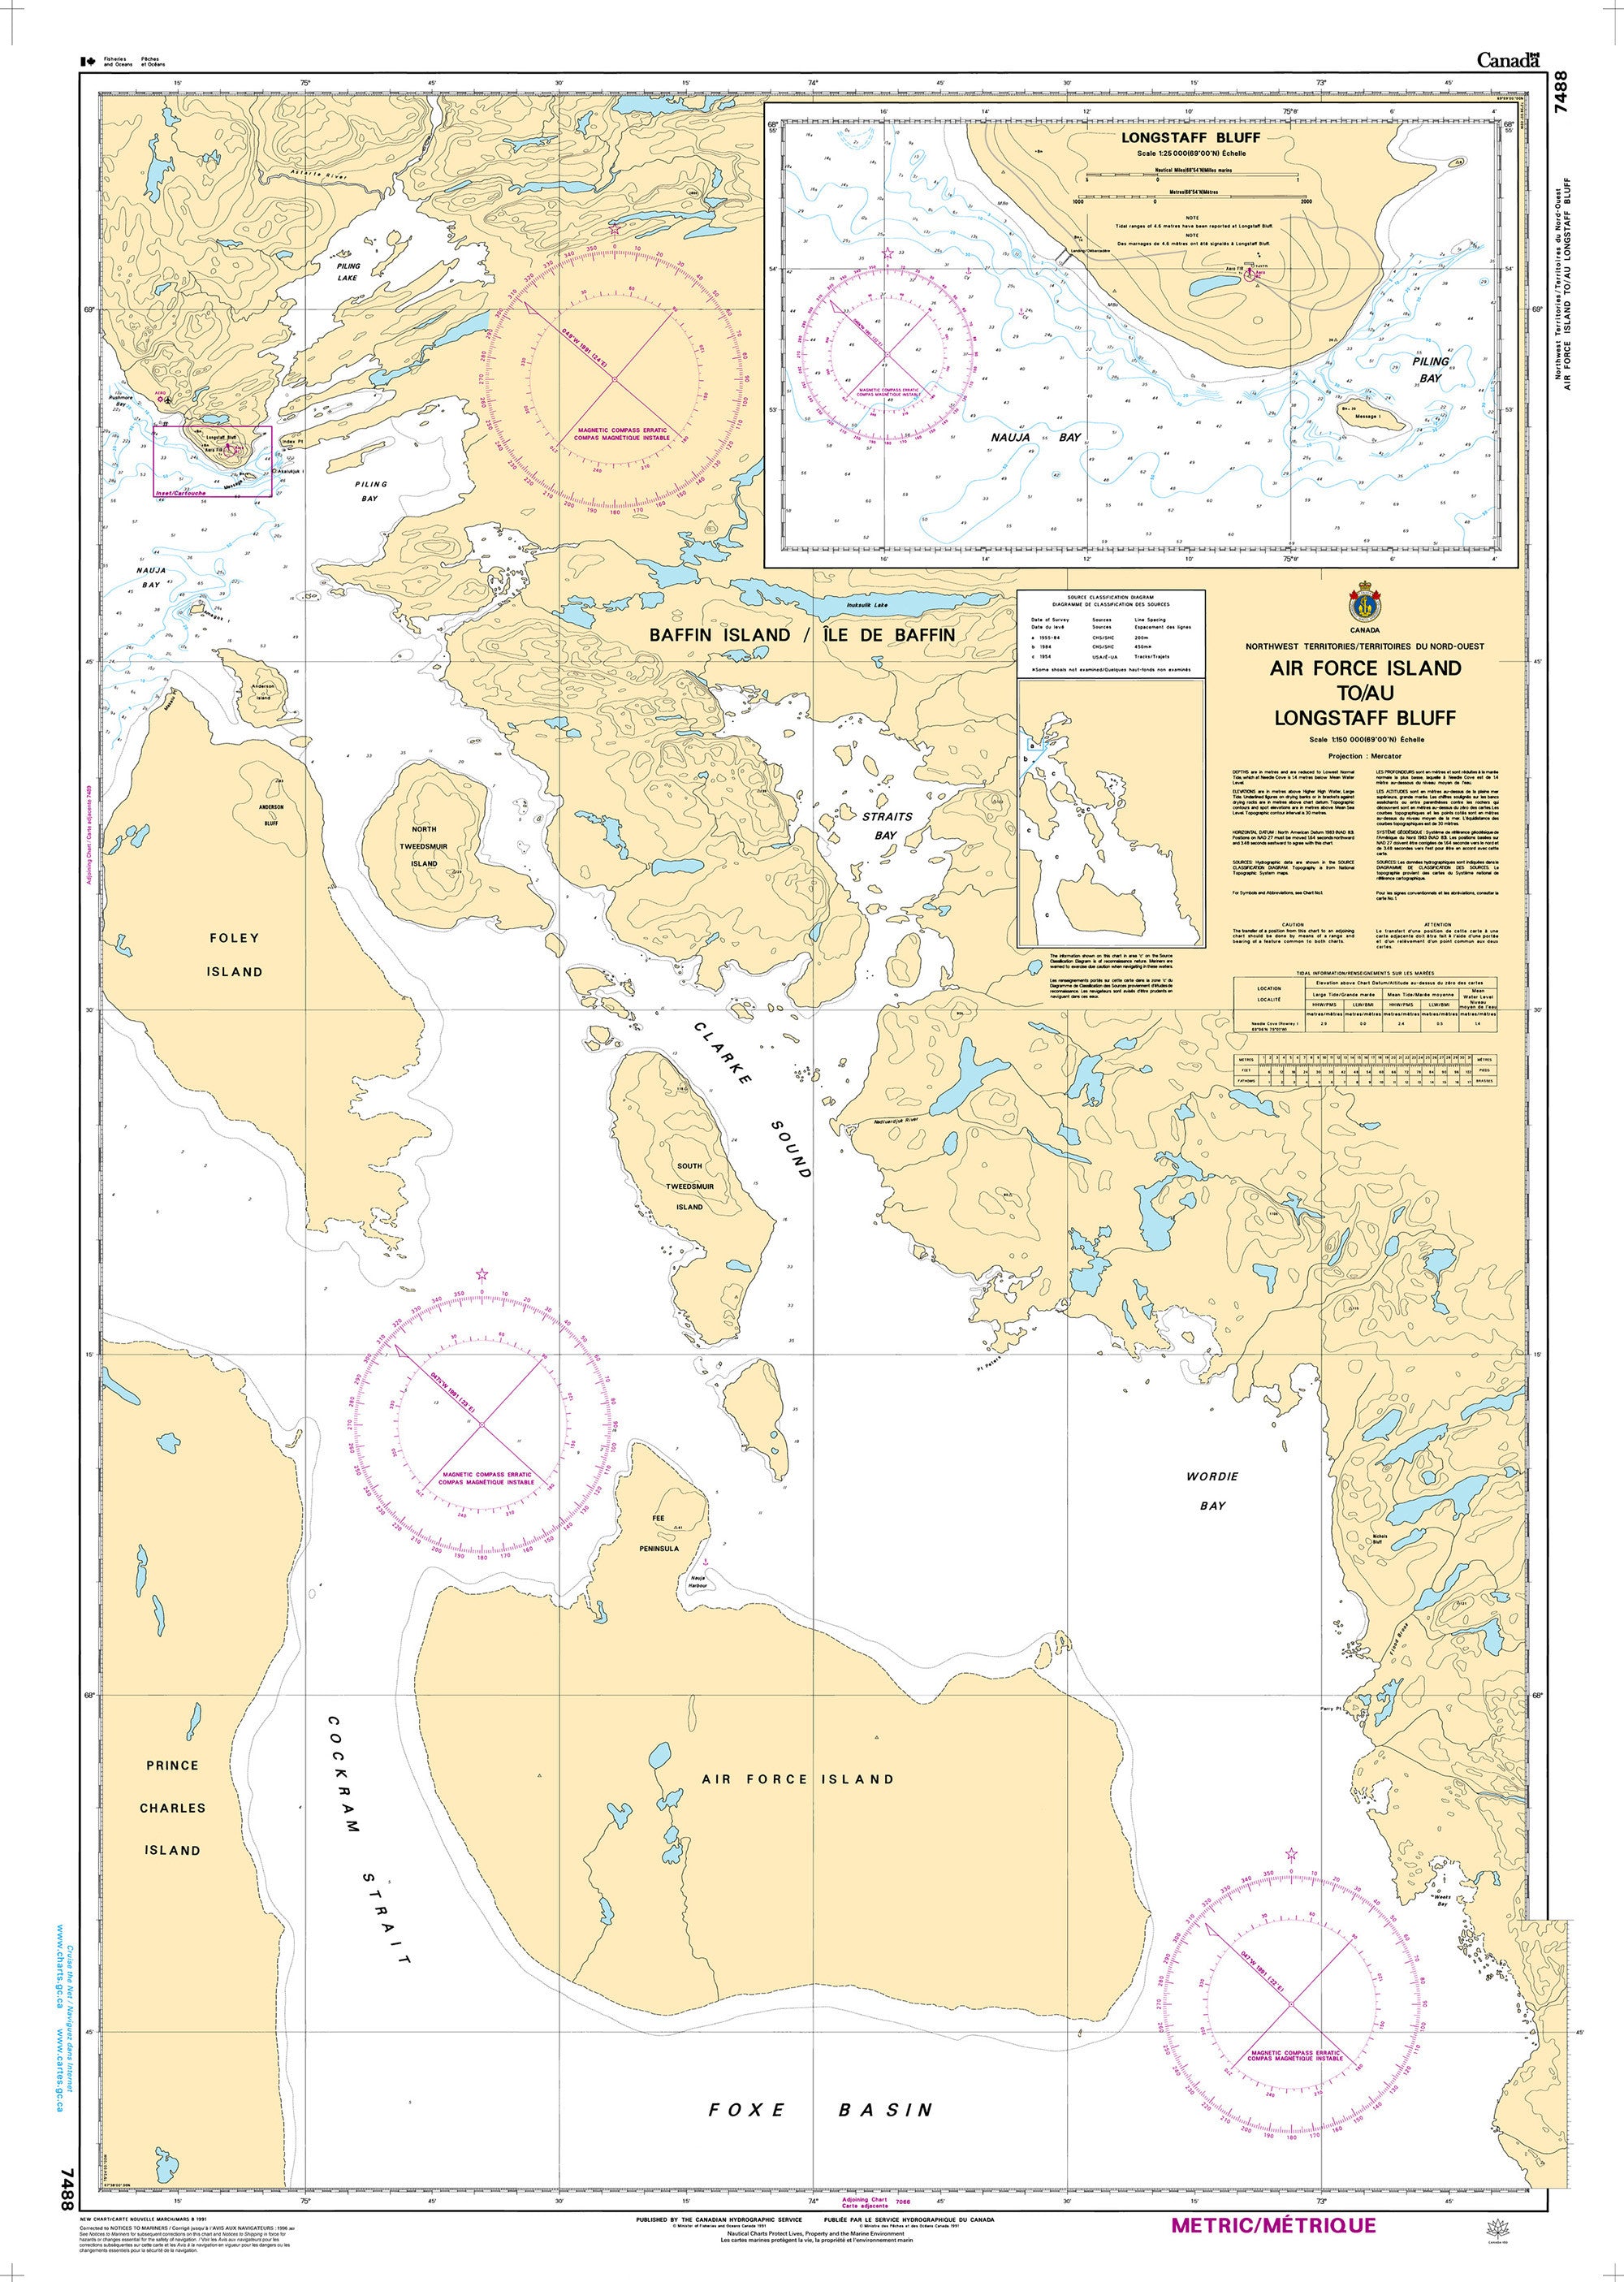 Canadian Hydrographic Service Nautical Chart CHS7488: Air Force Island to/au Longstaff Bluff